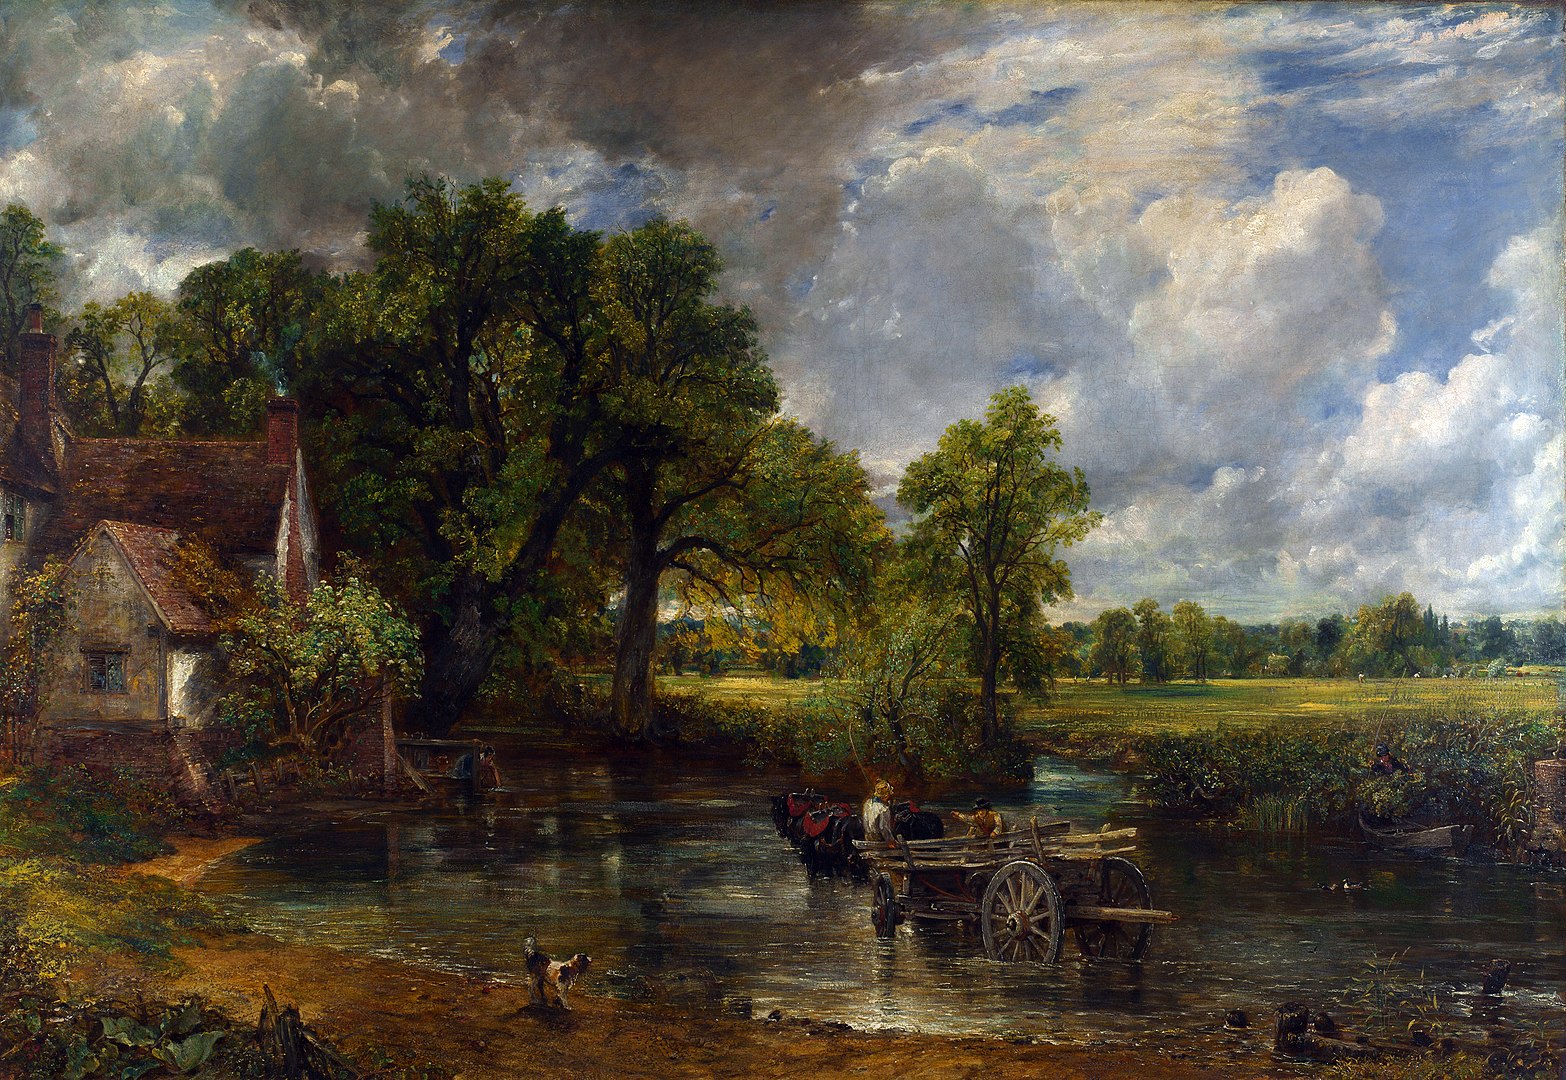 The Hay Wain" by John Constable (1821)